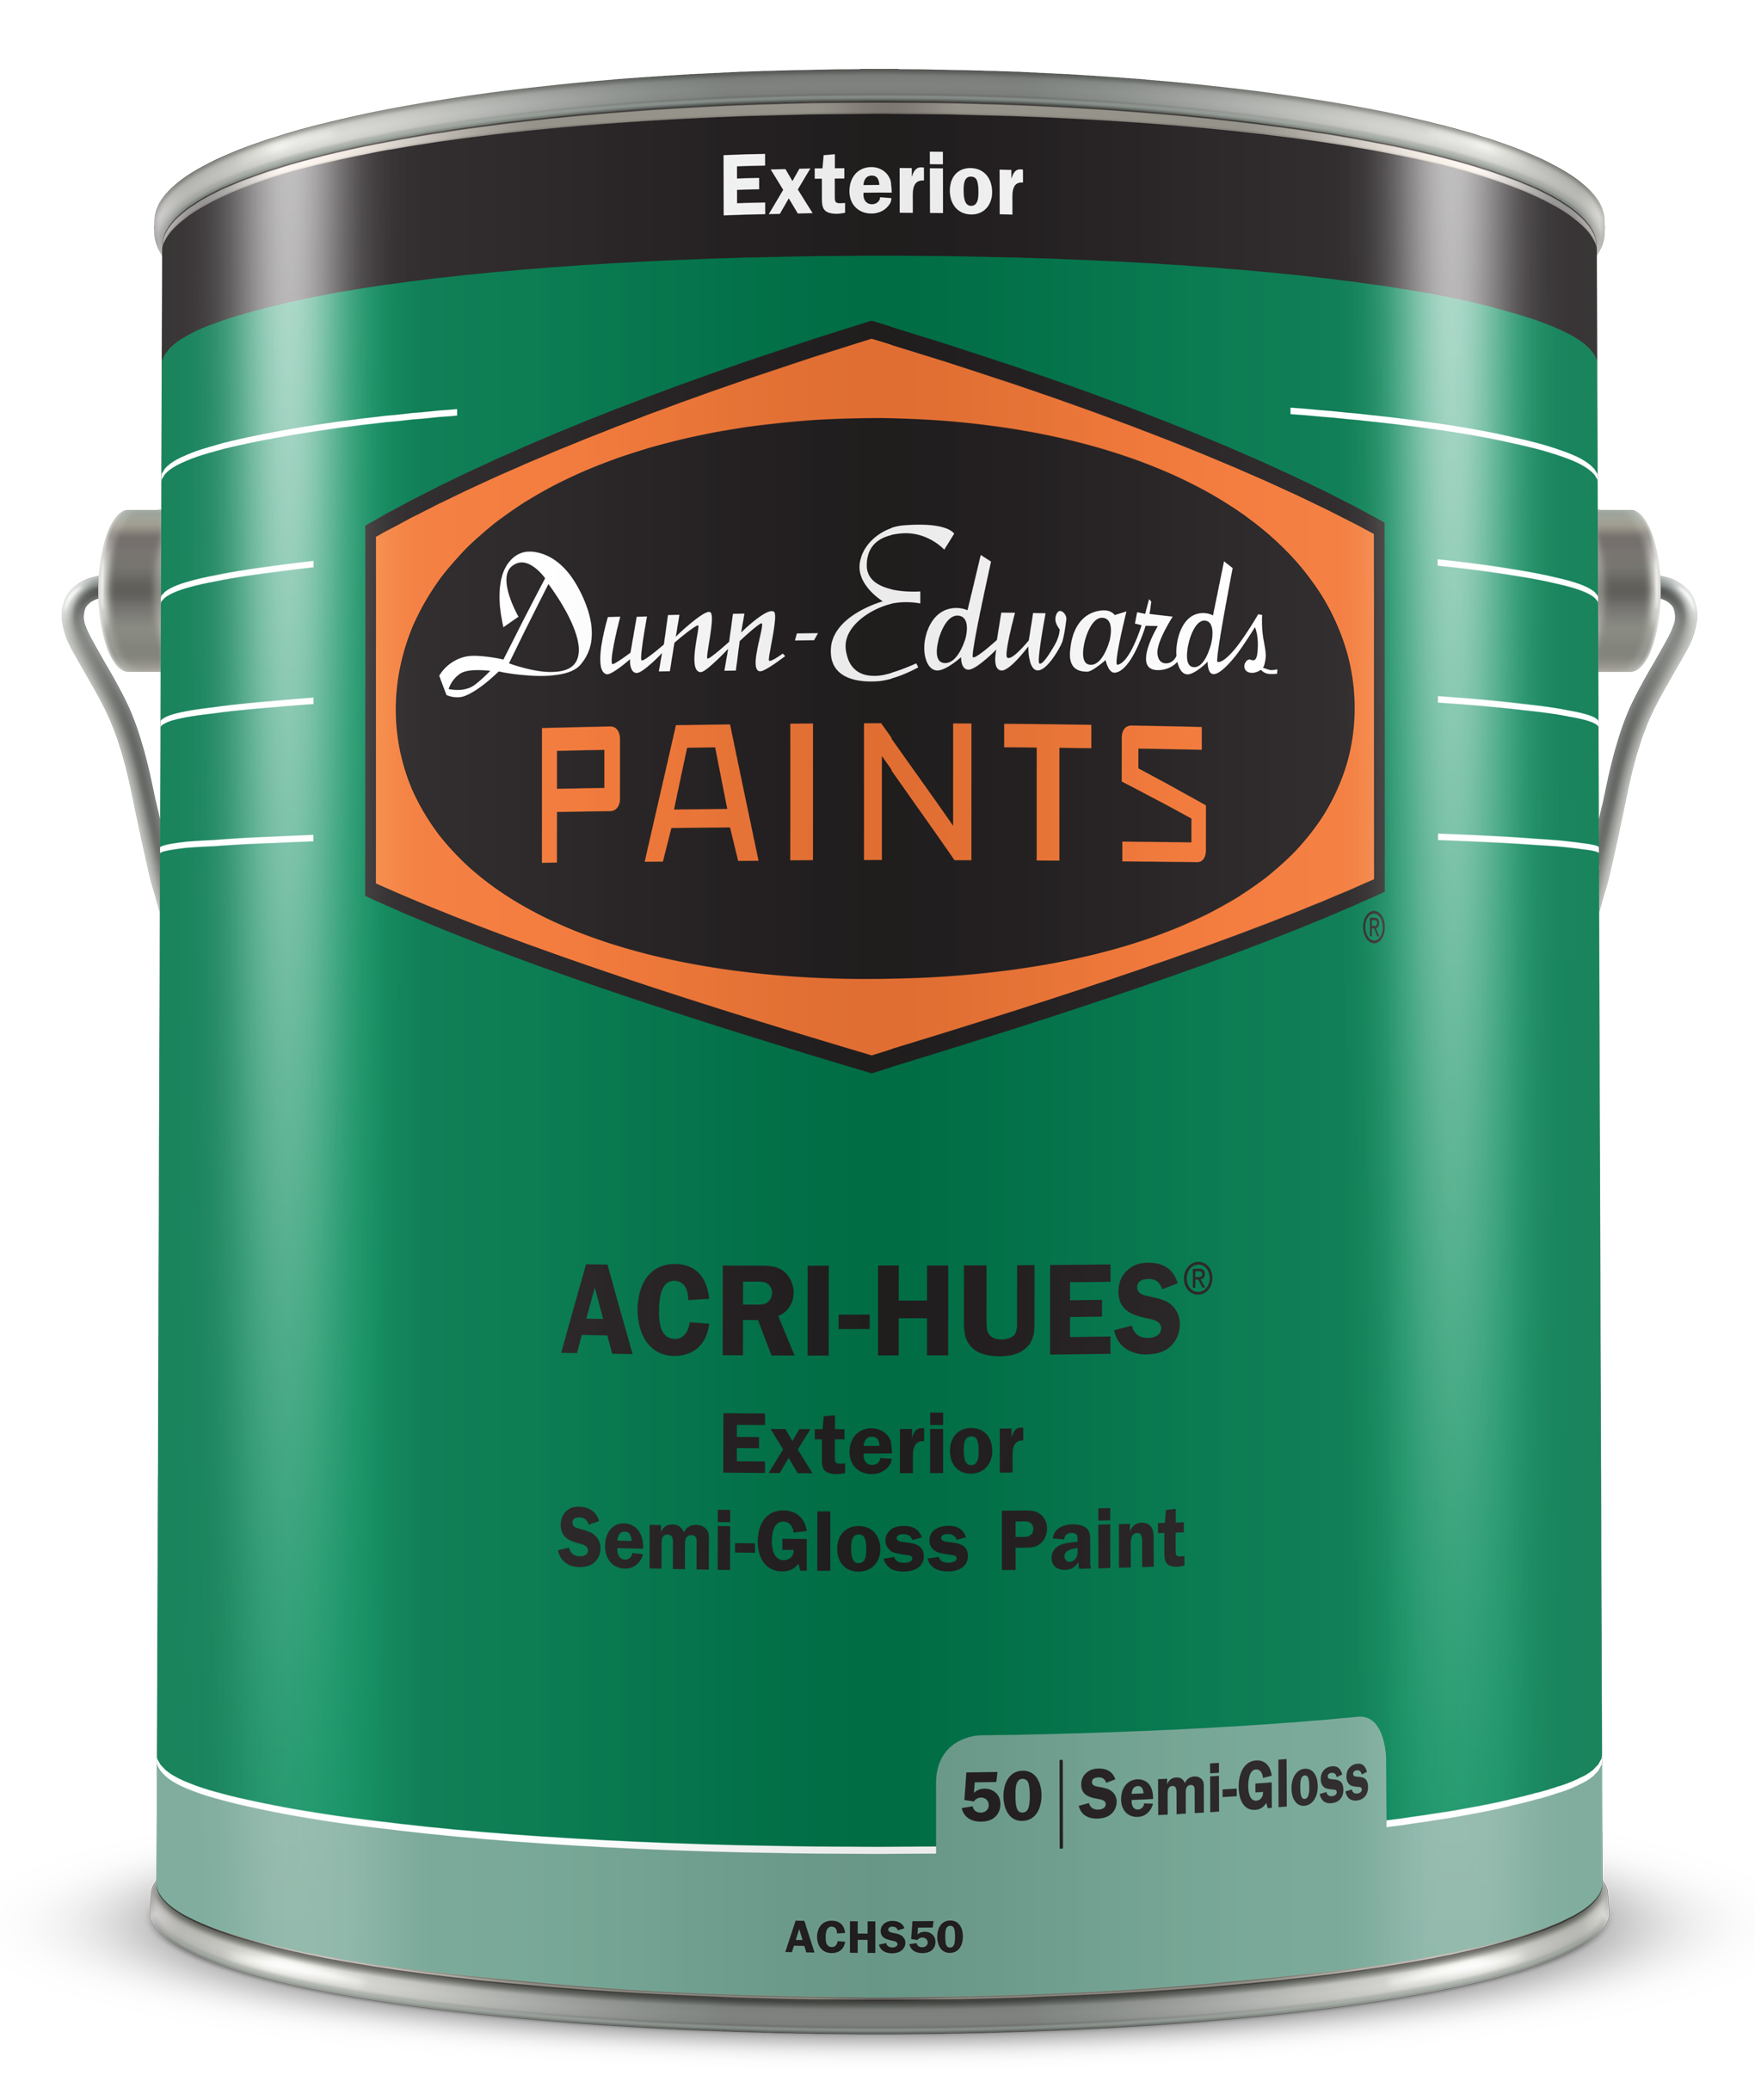 ACRI-HUES Exterior Semi-Gloss Paint Can